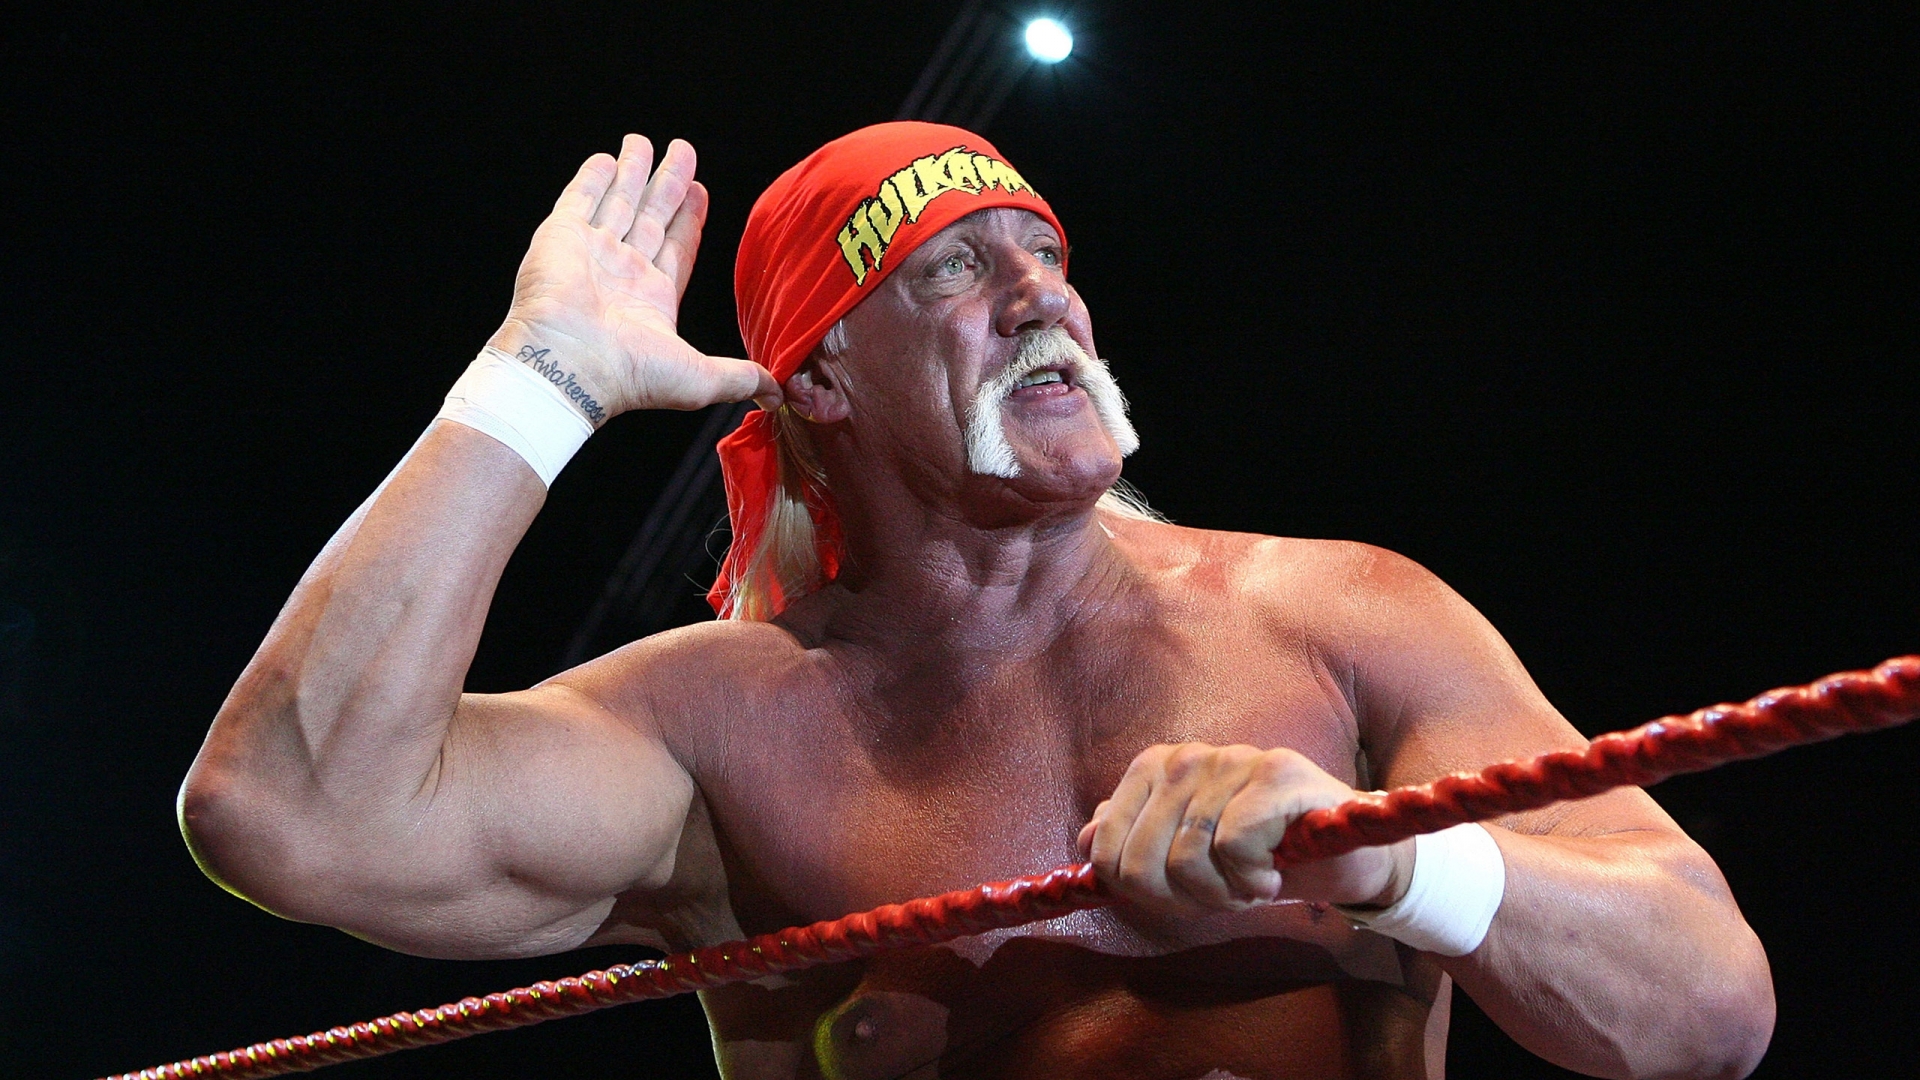 Hulk Hogan Salute for 1920 x 1080 HDTV 1080p resolution